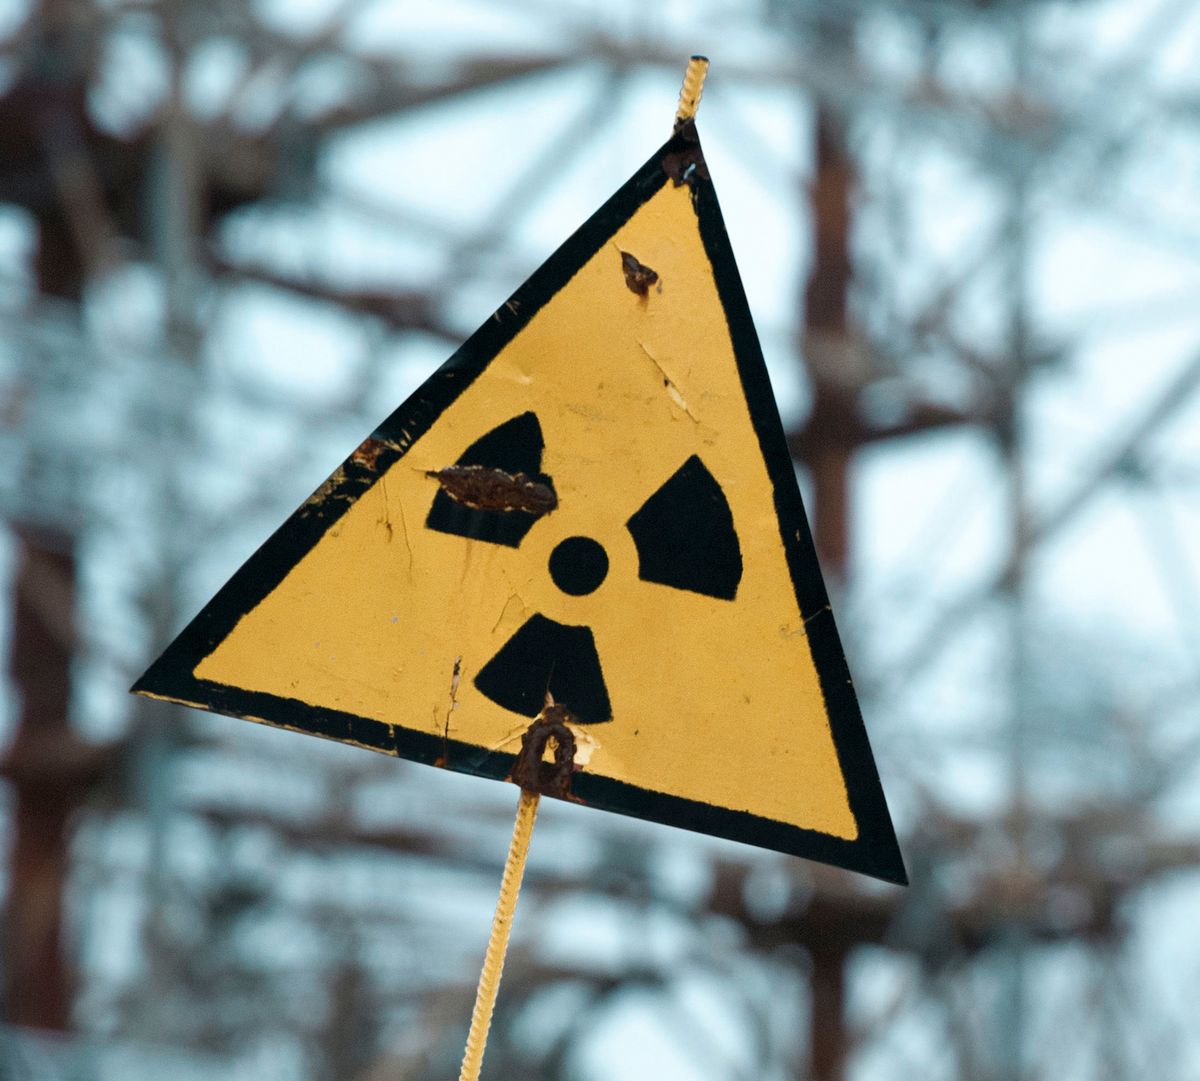 6 interesting facts about radium